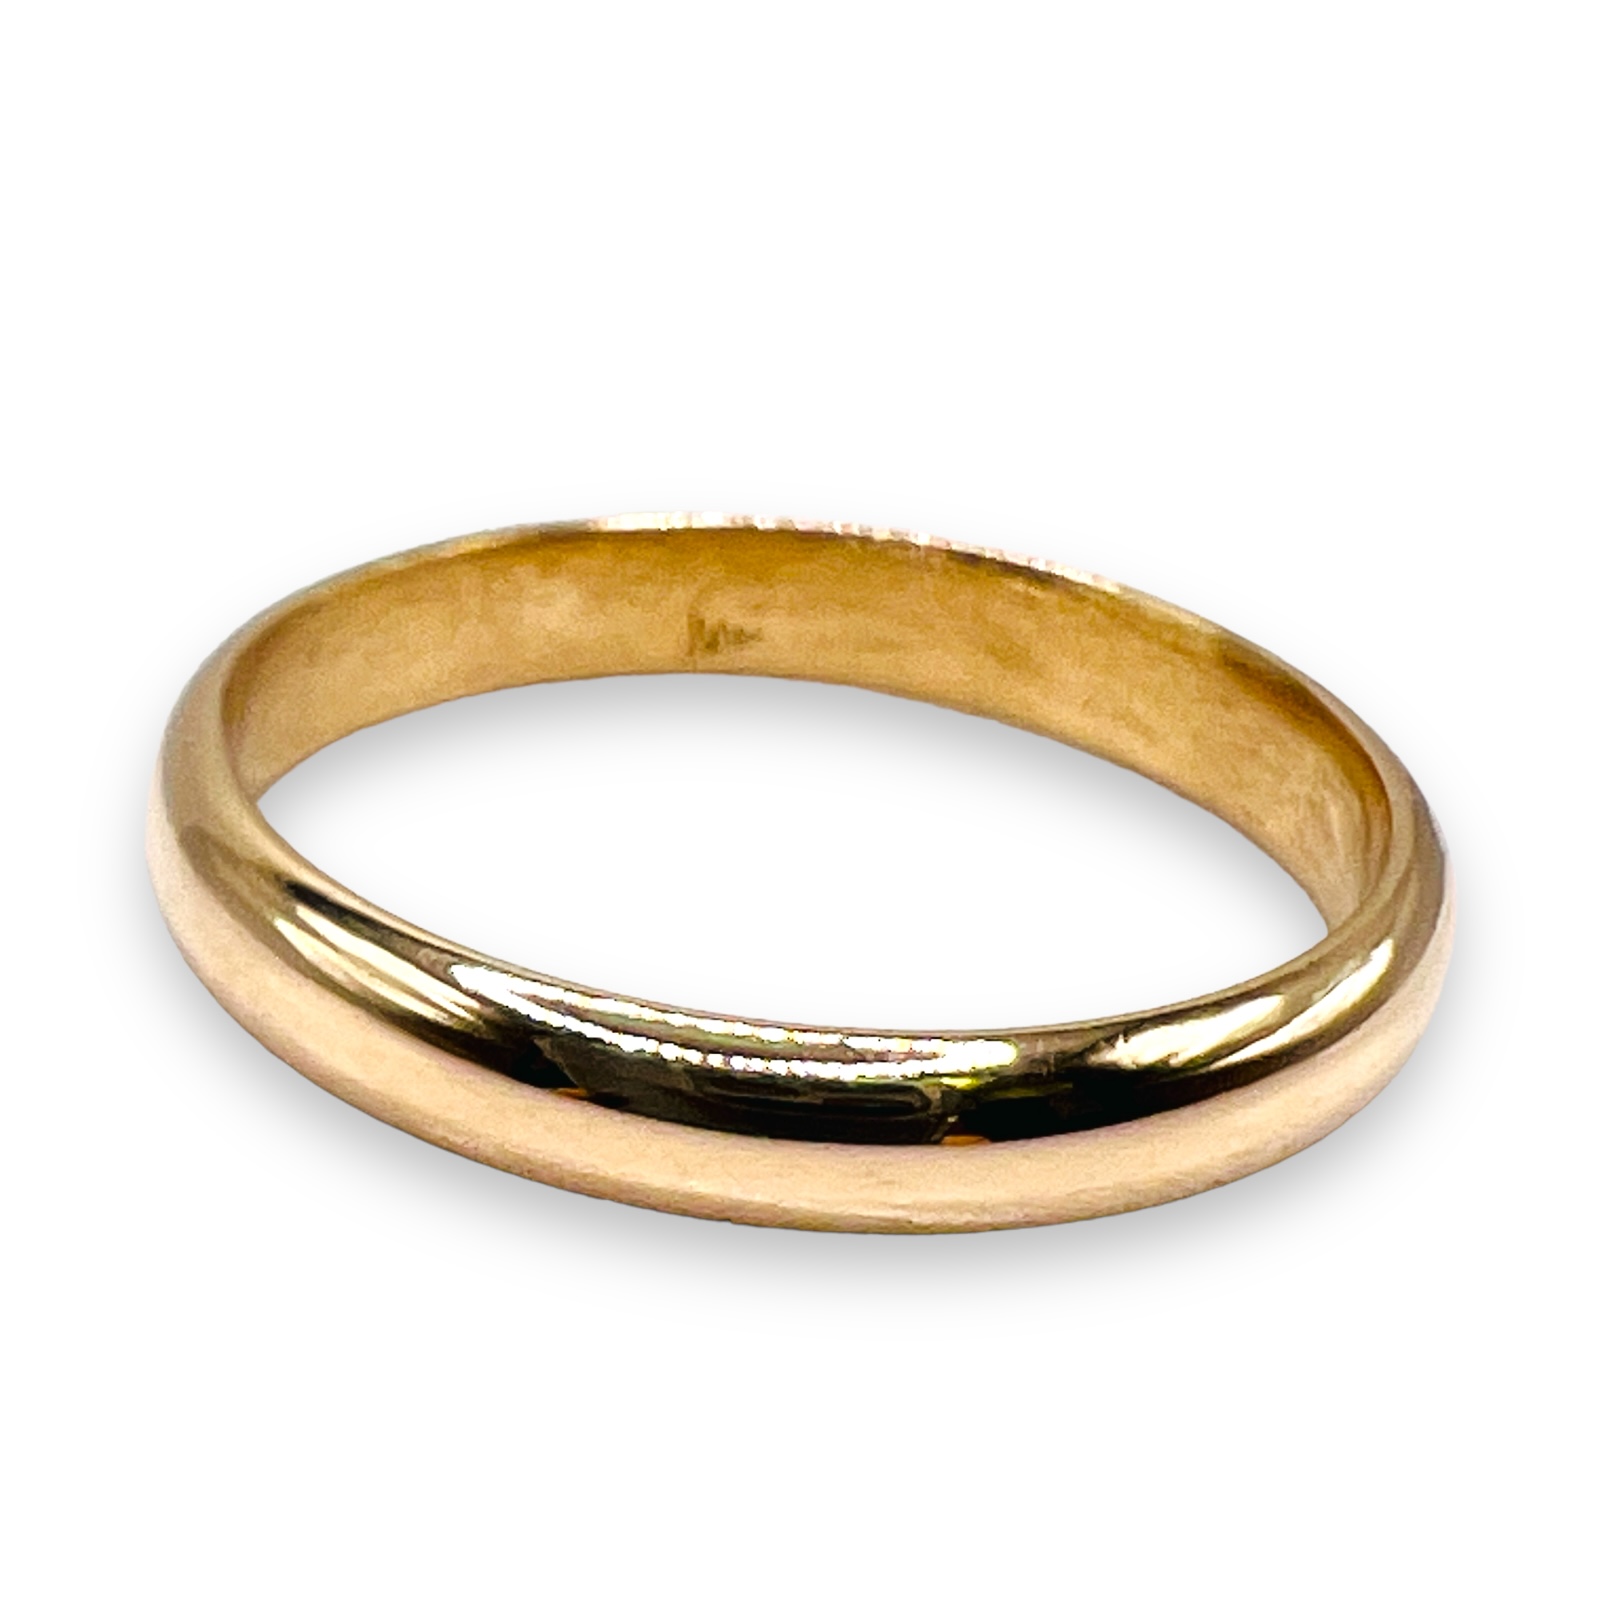 Men's plain gold wedding band ring